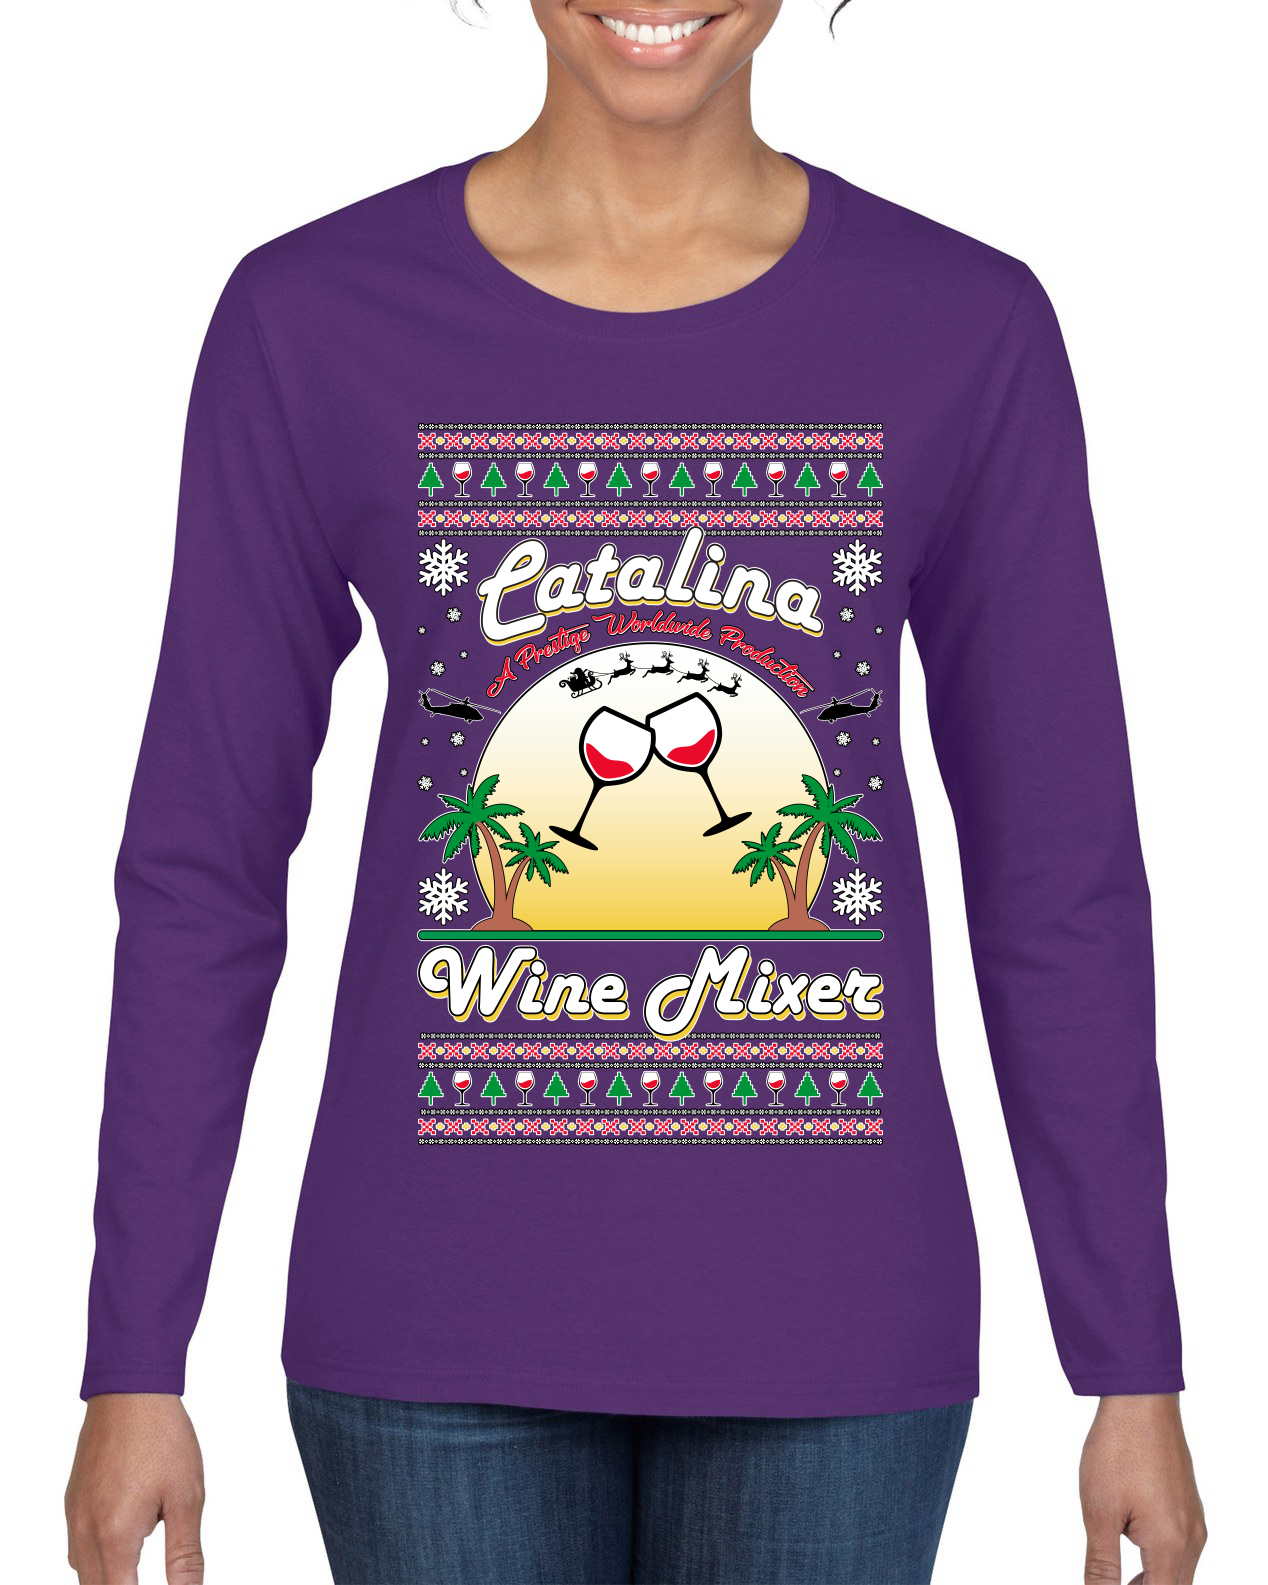 Wild Bobby Step Bros Catalina Wine Mixer Xmas Holiday Movie Humor Ugly Christmas Sweater Women Graphic Long Sleeve Tee, Purple, X-Large - image 1 of 5